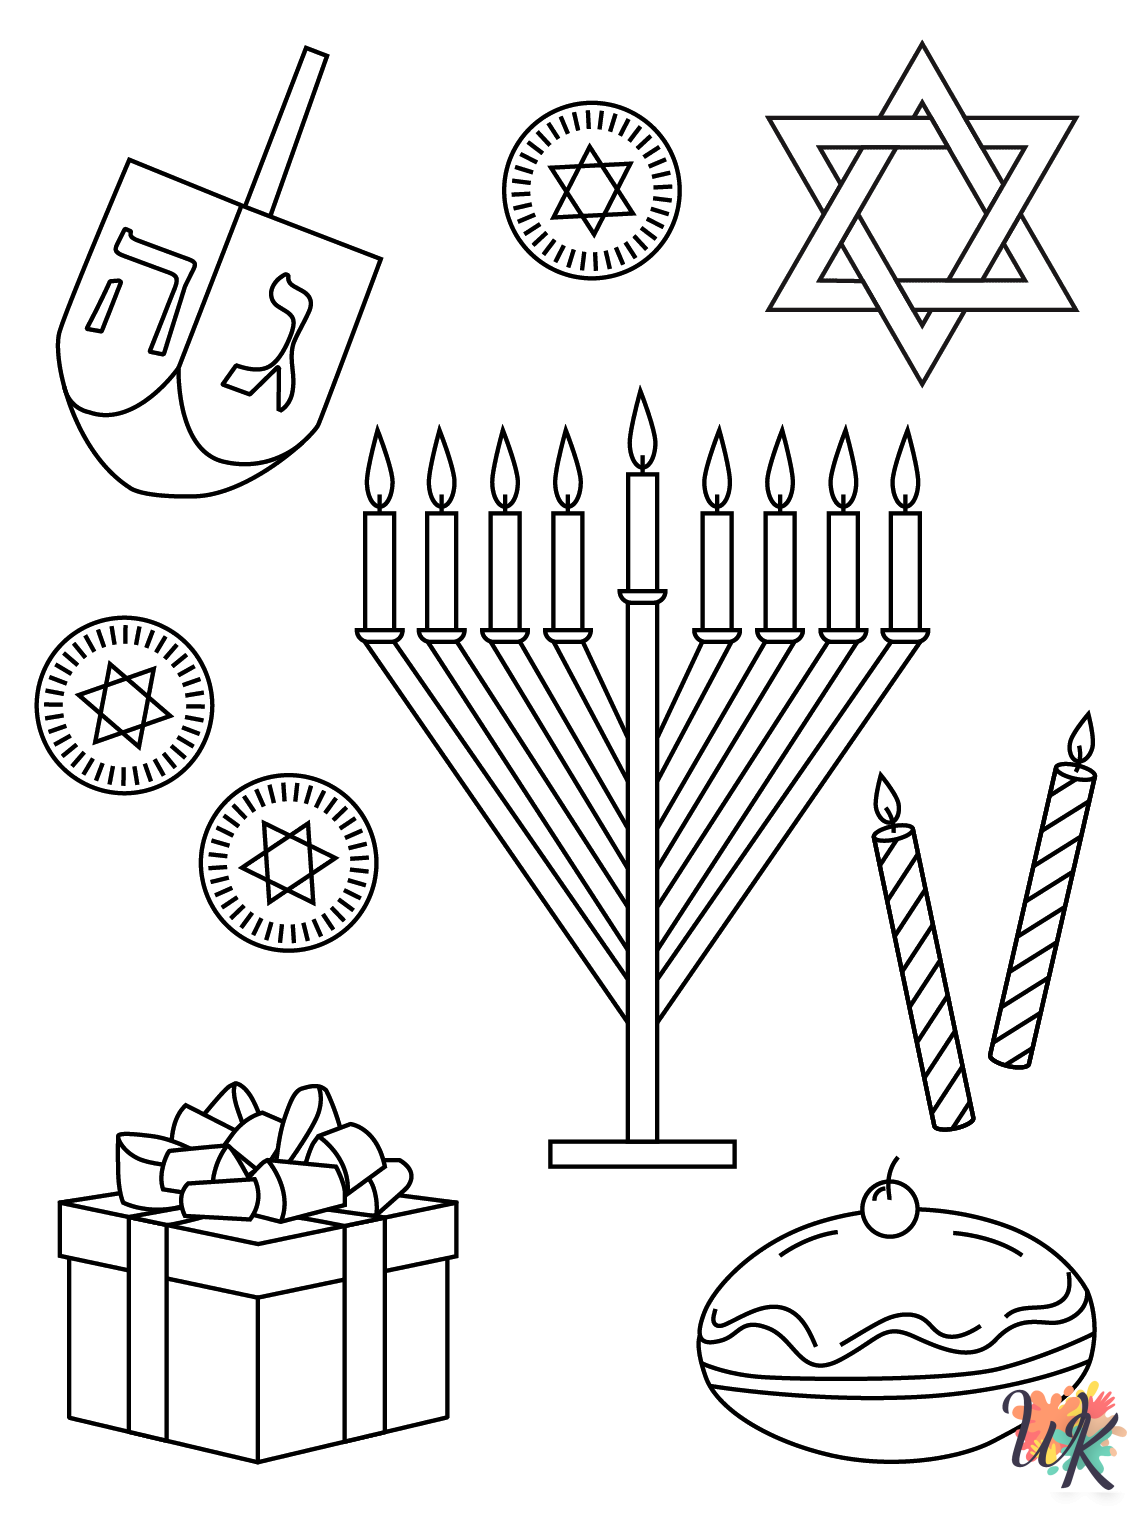 Hanukkah coloring pages for preschoolers